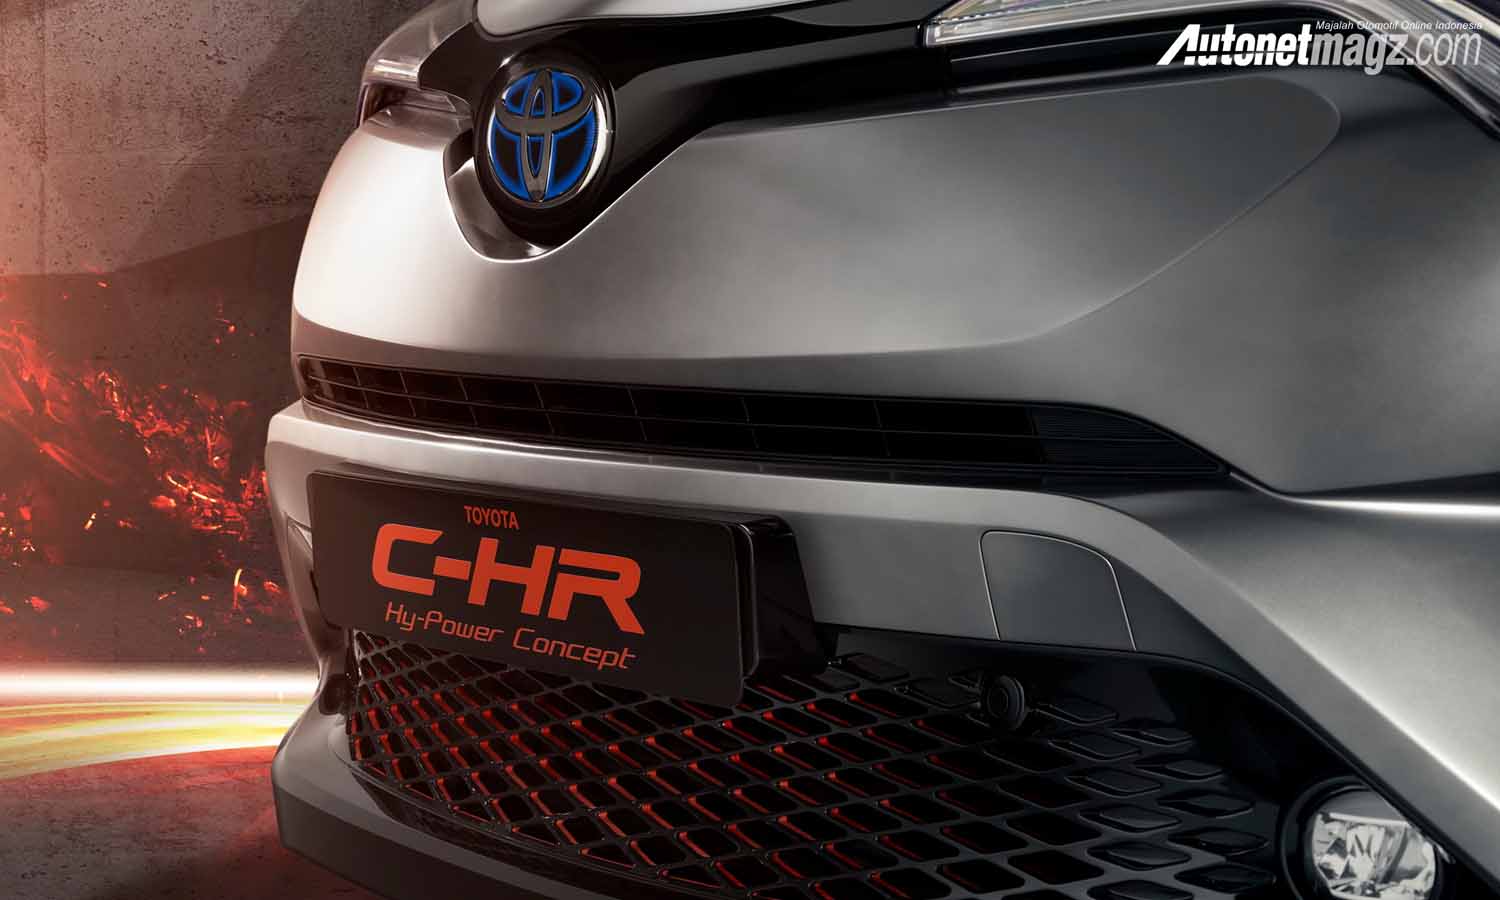 Berita, Toyota C-HR Hy-Power Concept: Frankfurt Motor Show 2017 : Toyota C-HR Hy-Power Concept & New Land Cruiser Akan Diperkenalkan